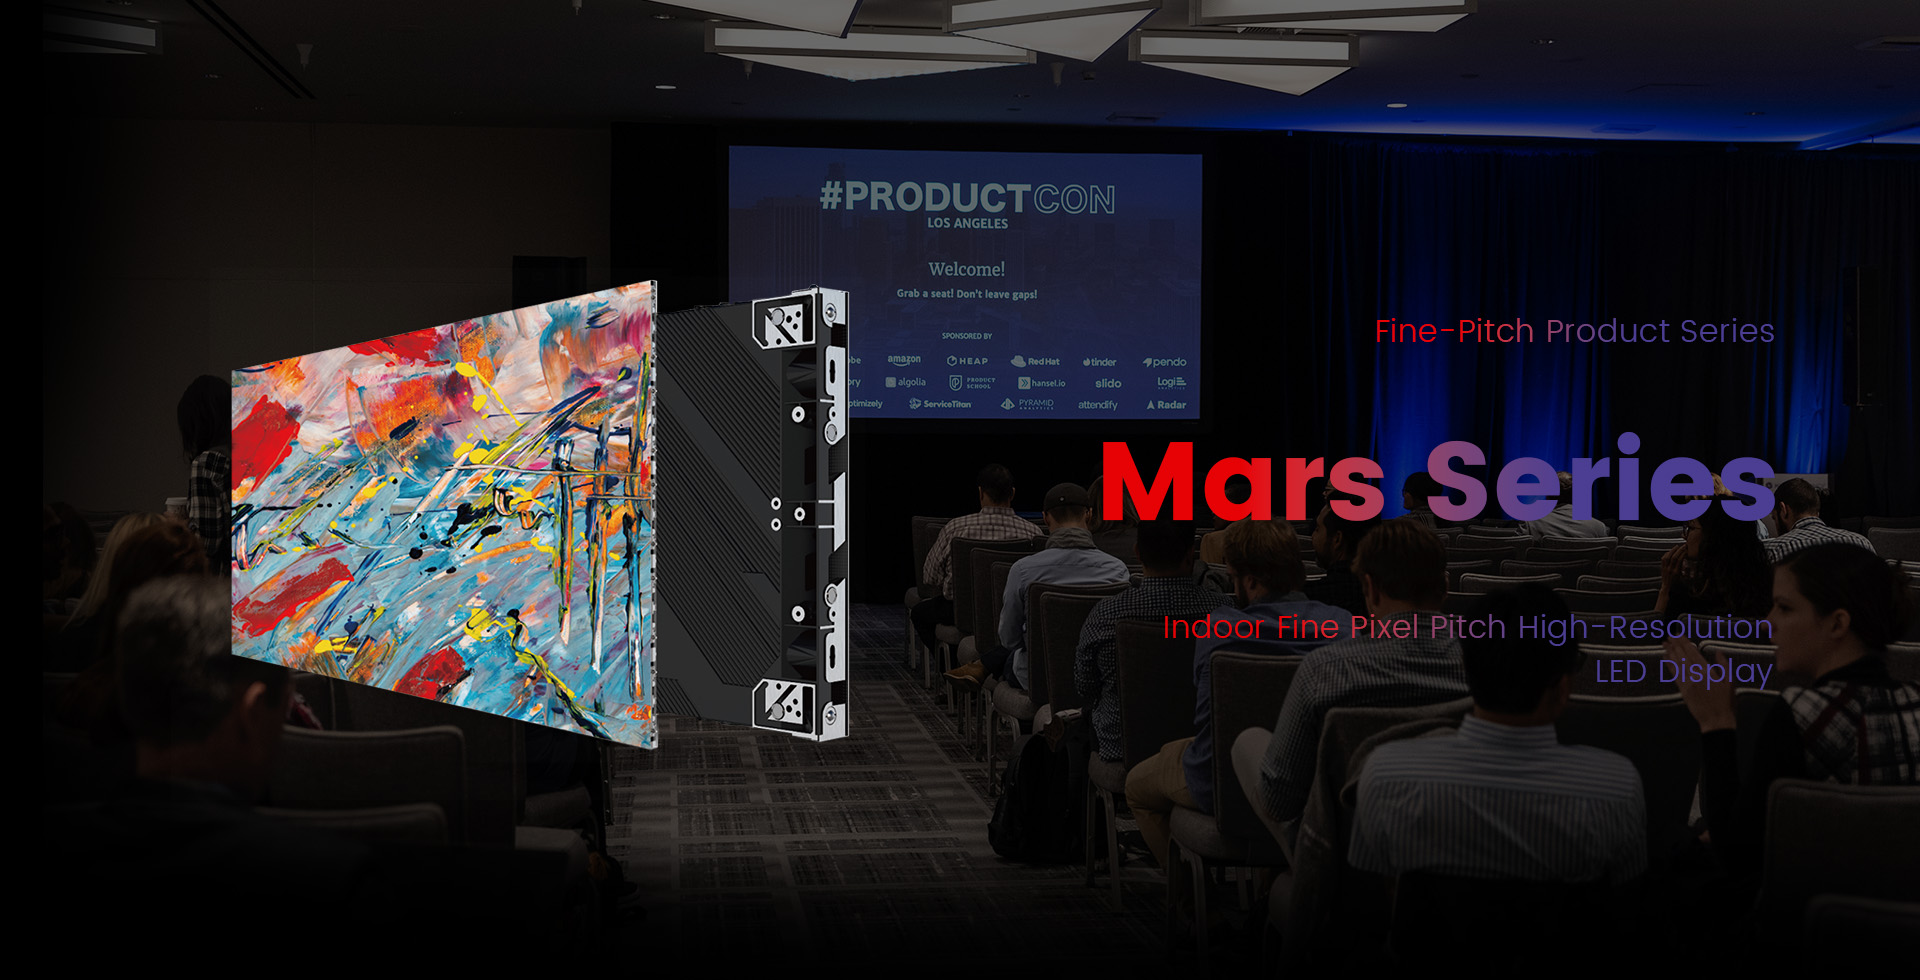 Indoor fine pixel pitch high-resolution LED display - Mars VMX